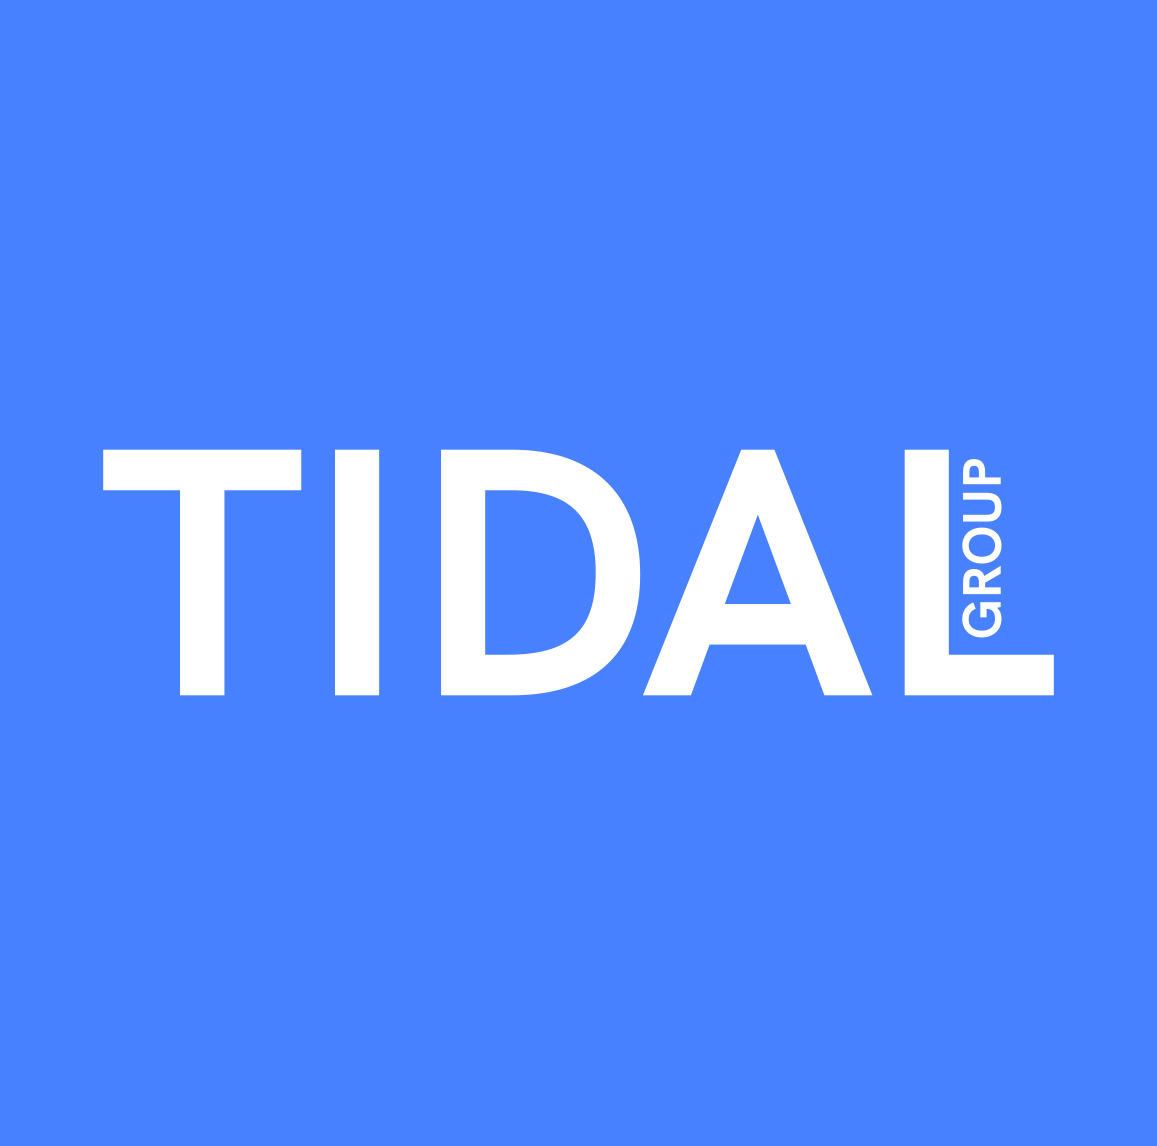 The Tidal Group logo